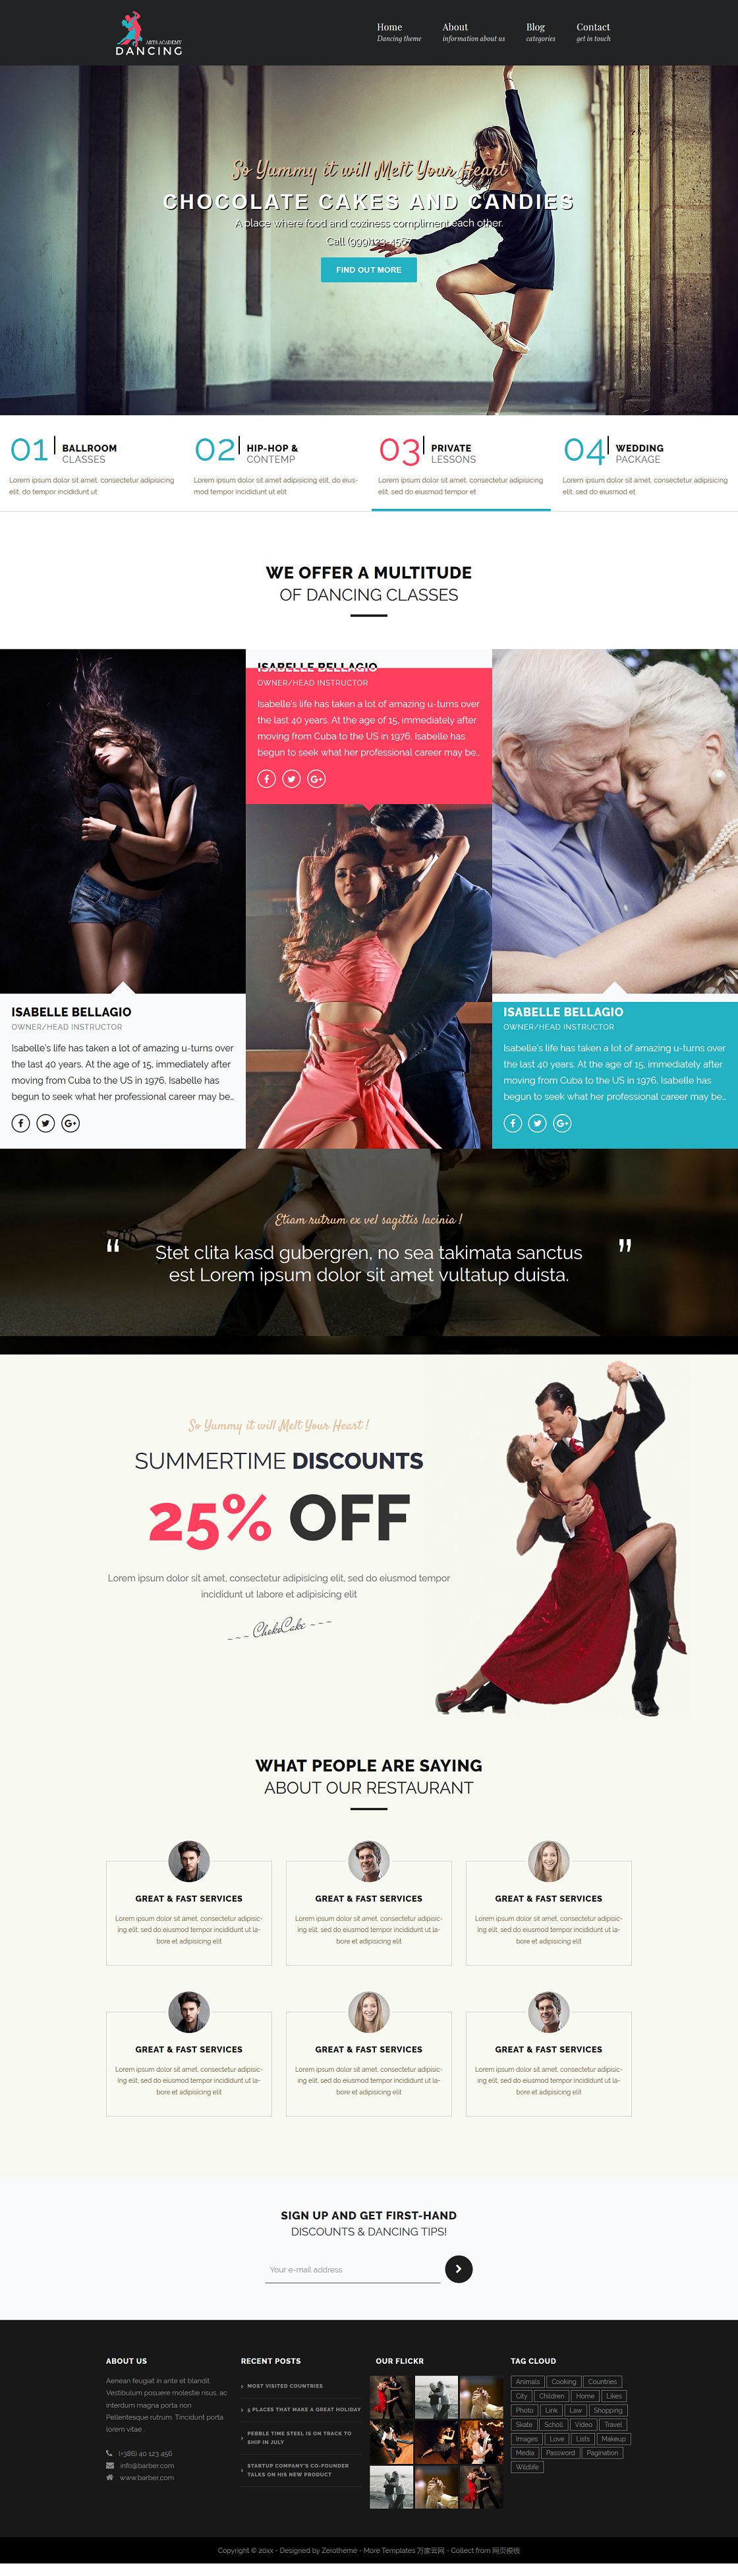 Dancing国际舞蹈教学培训班网页模板